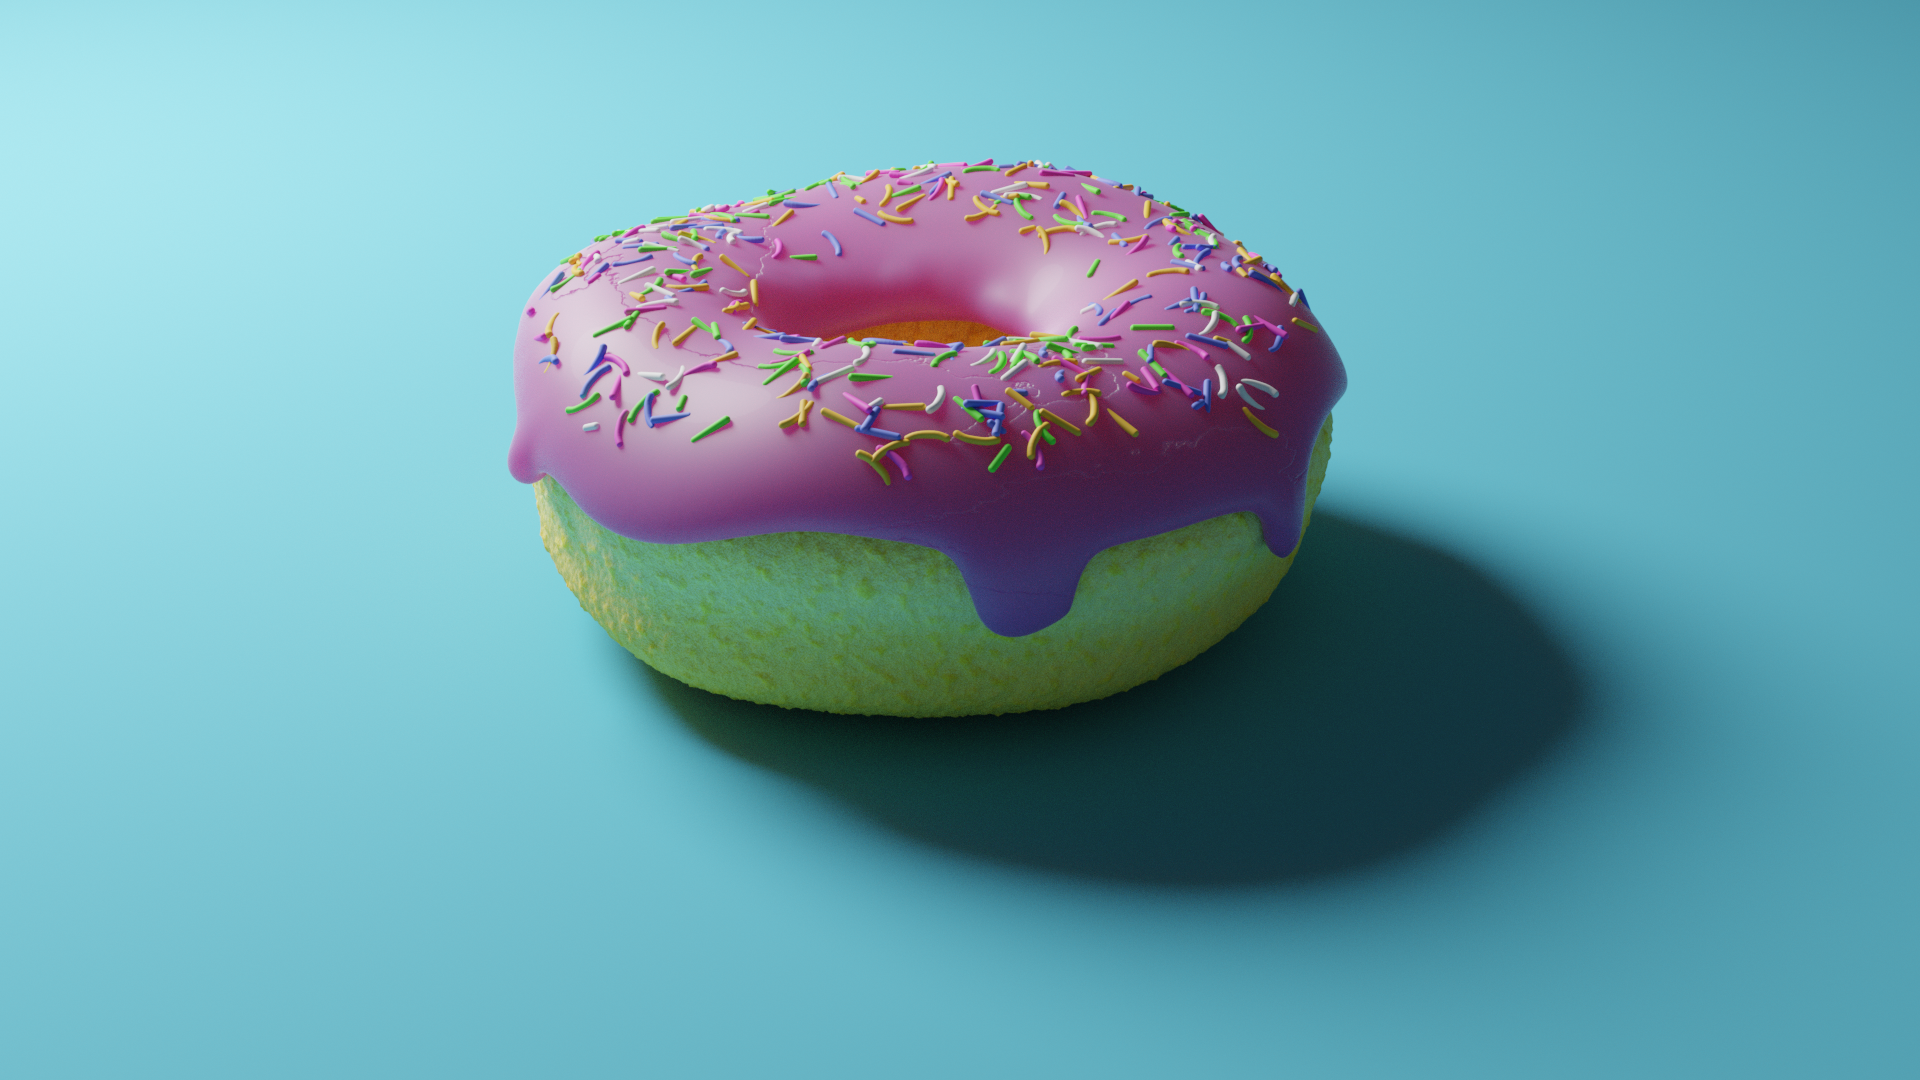 Donut with Sprinkles